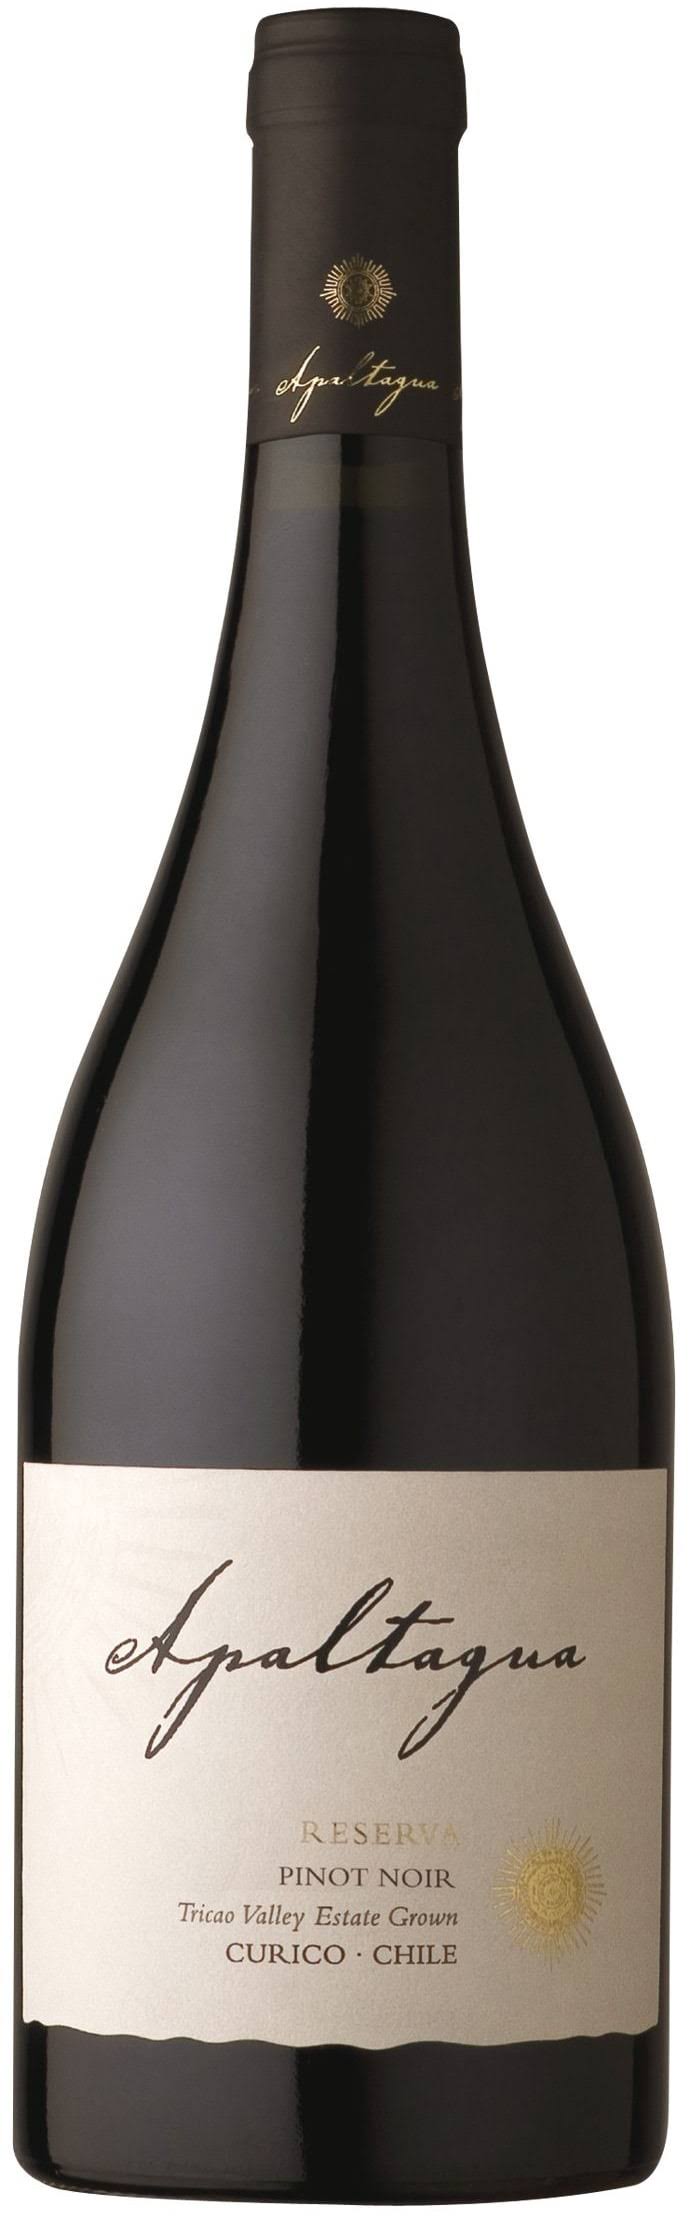 Apaltagua Pinot Noir 2013 - 750 ml